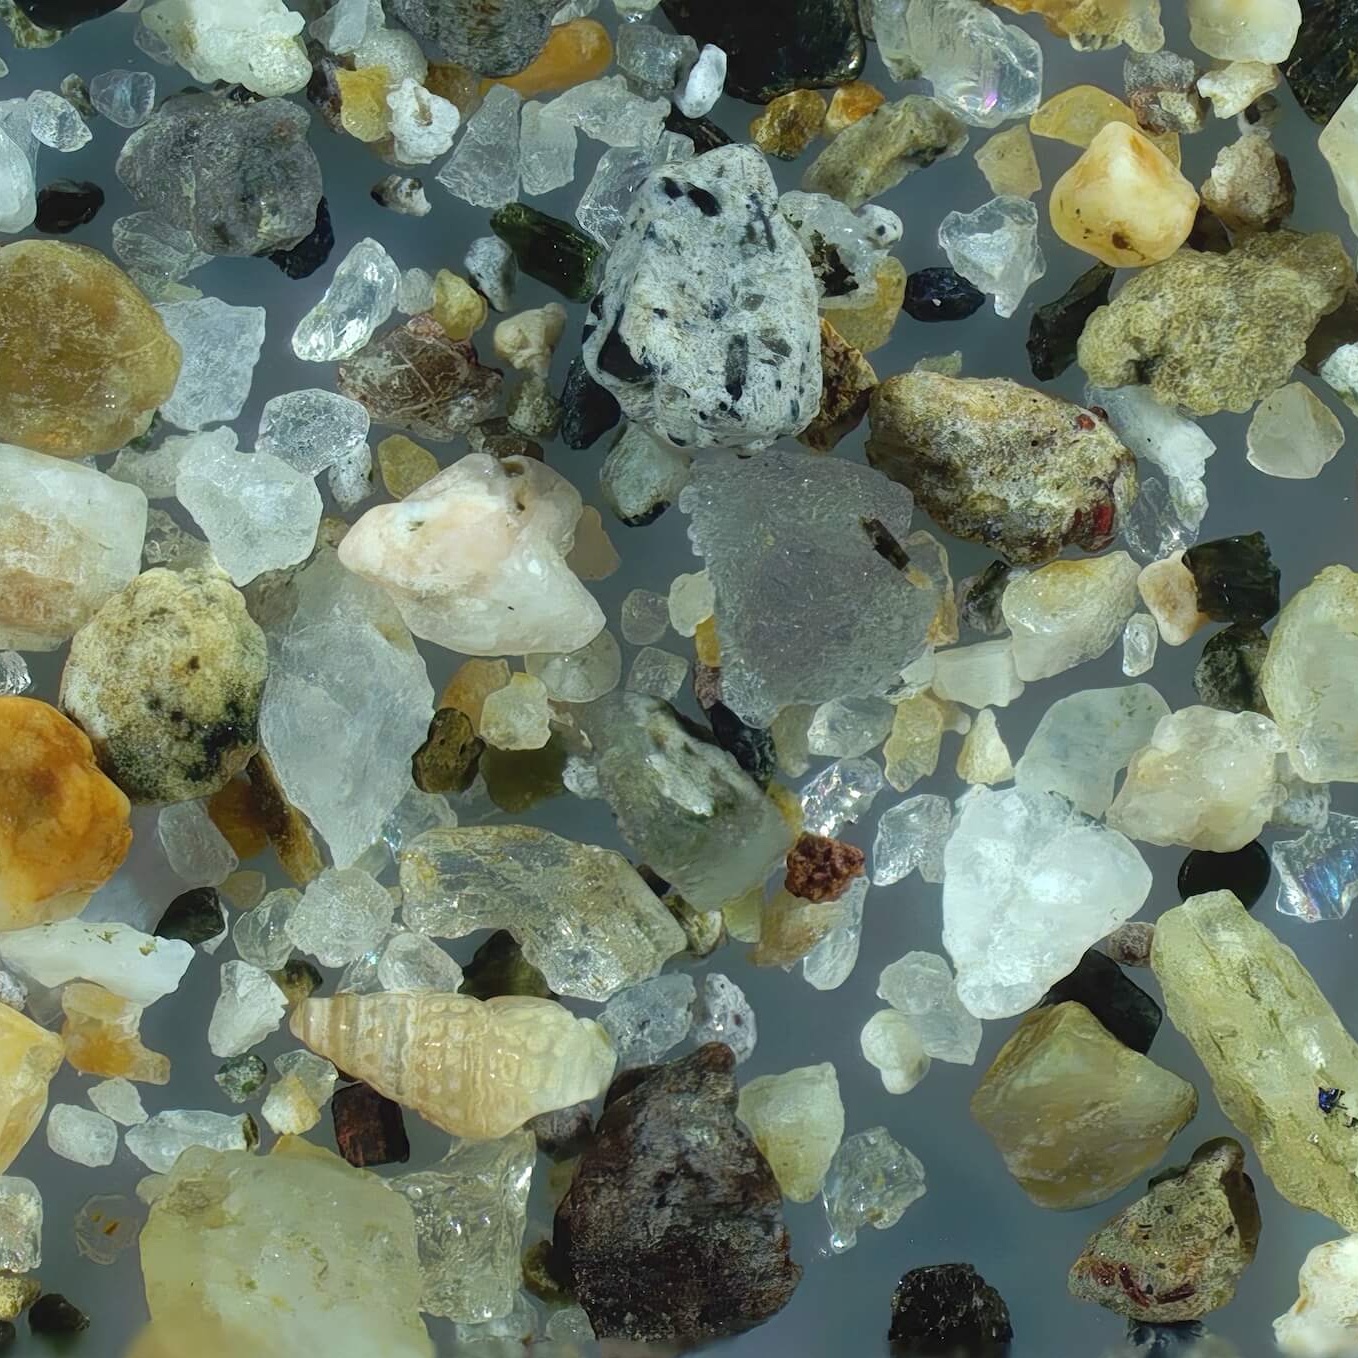 Sq2 Fukuura Beach Oki Island Okinoshima Japan Sand Grains Magnified Under Microscope 1